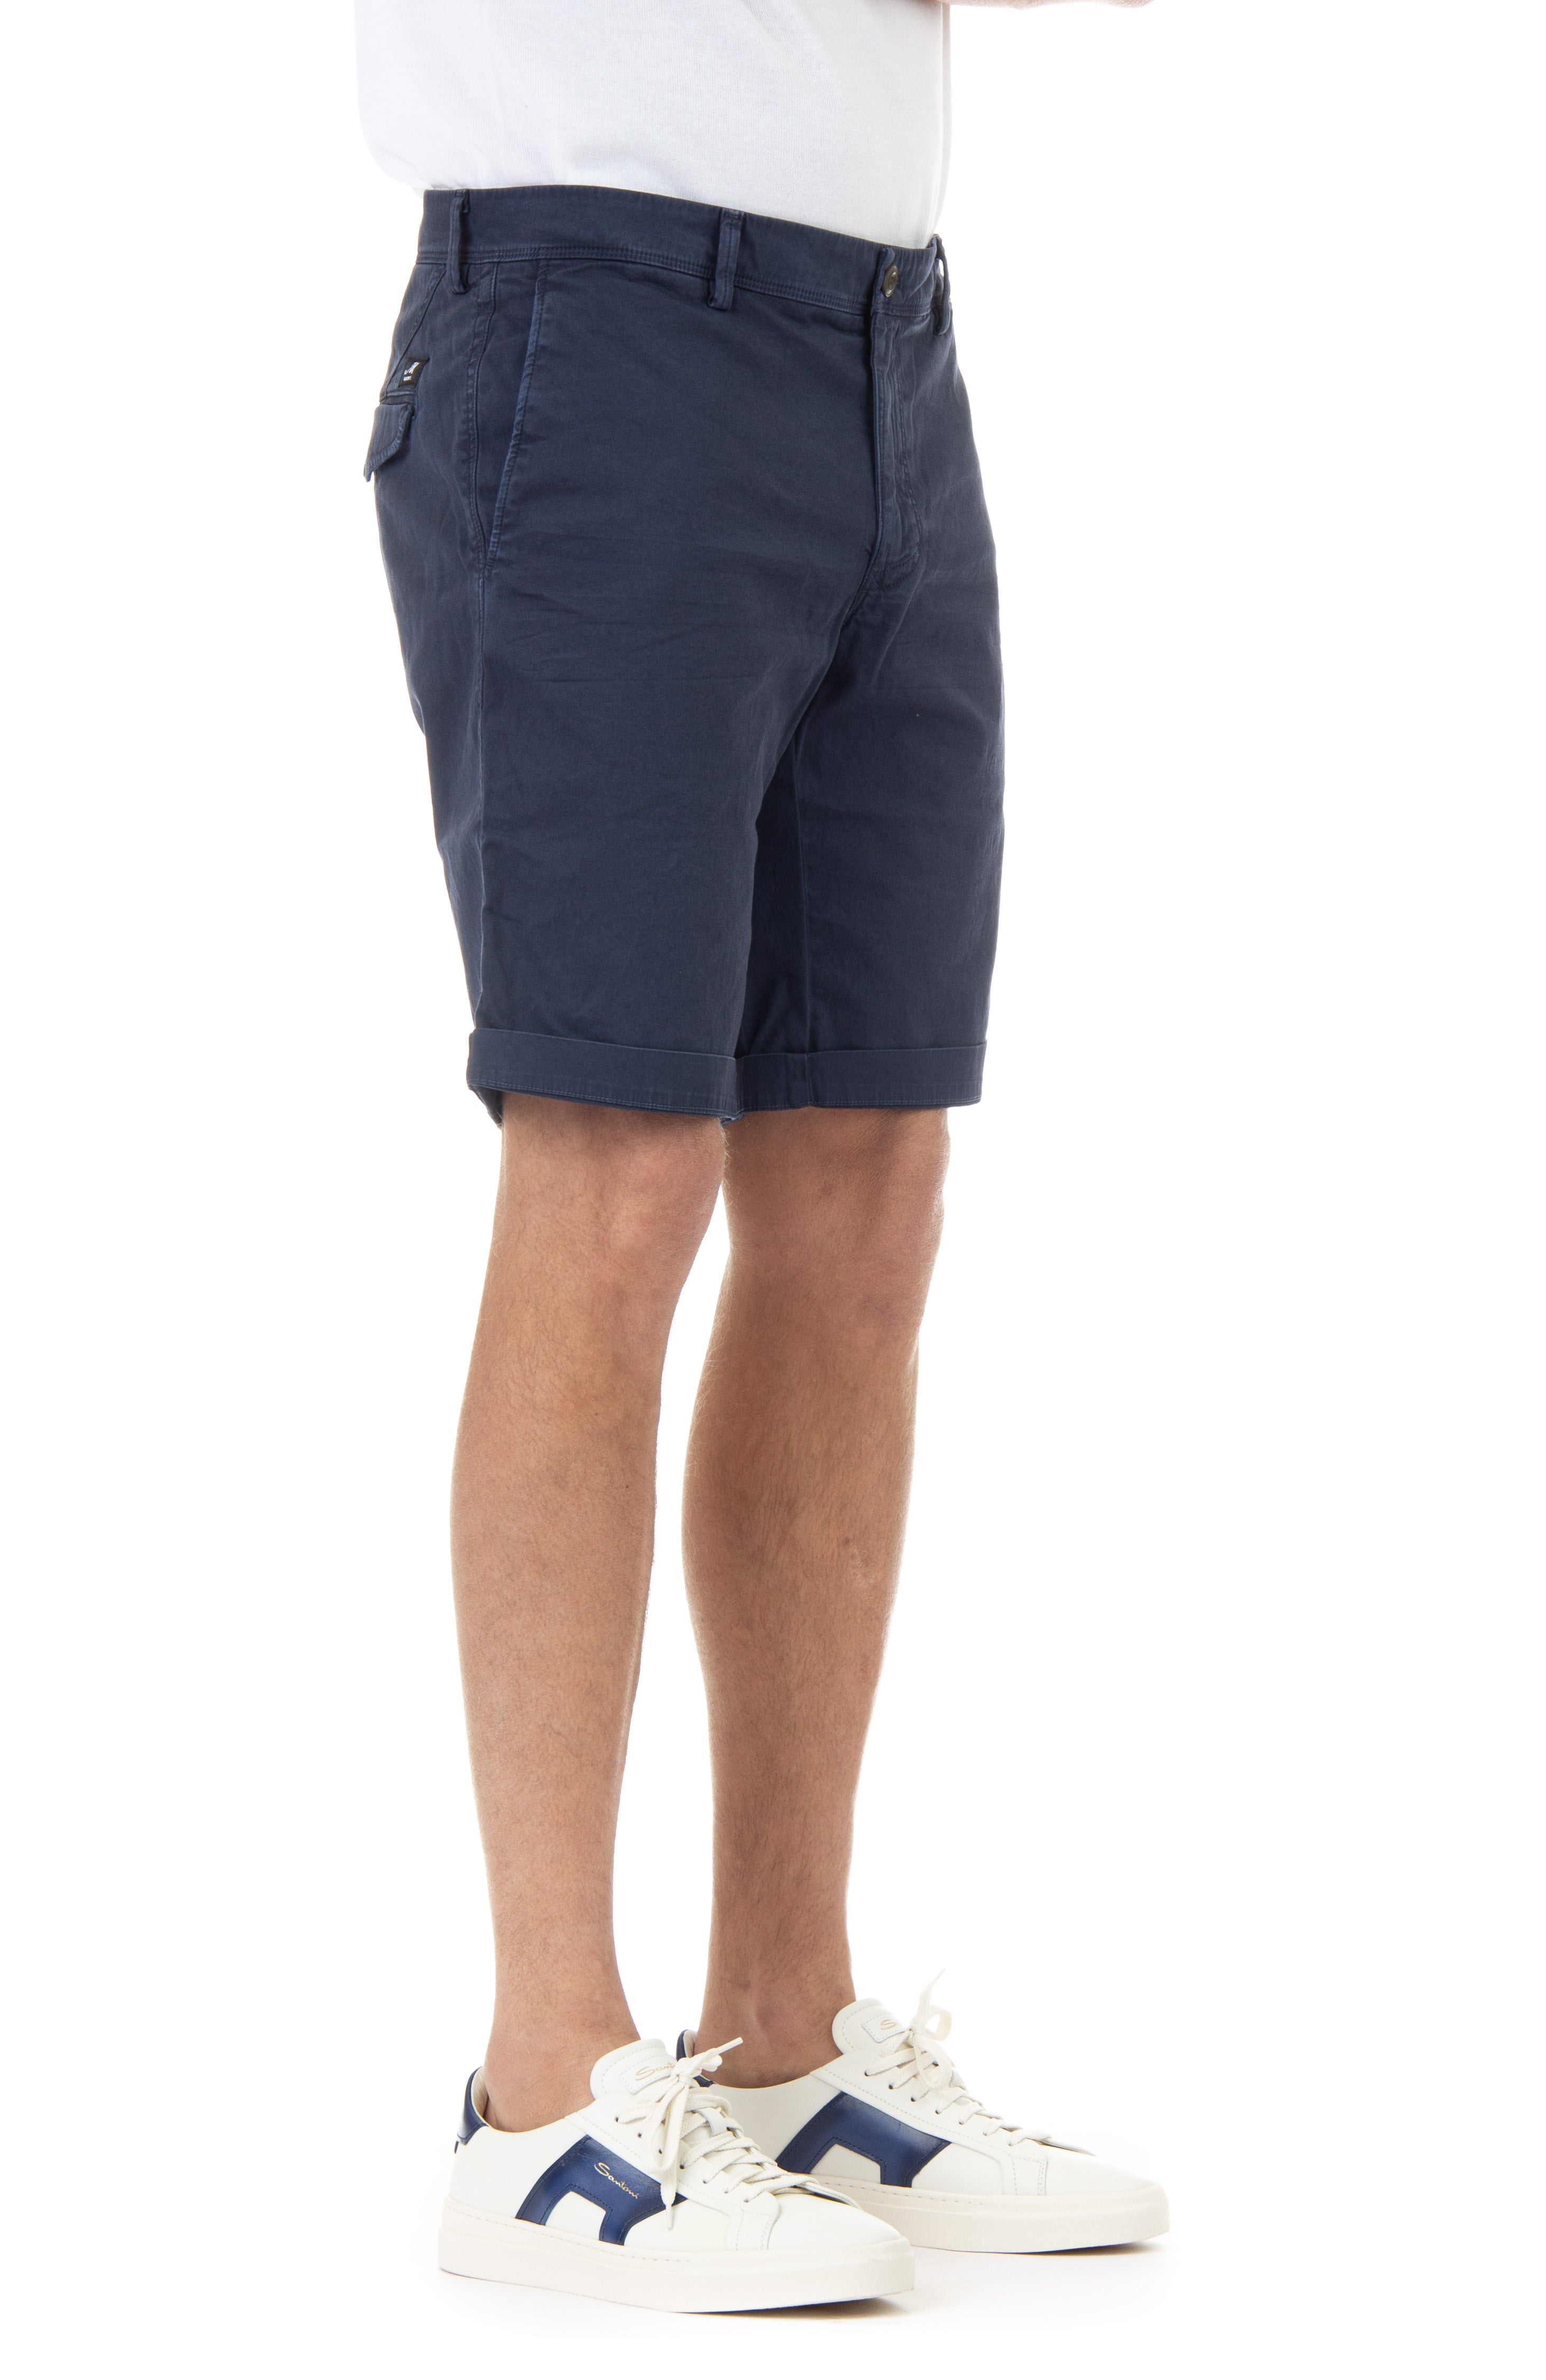 Eisenhower model cotton Bermuda shorts